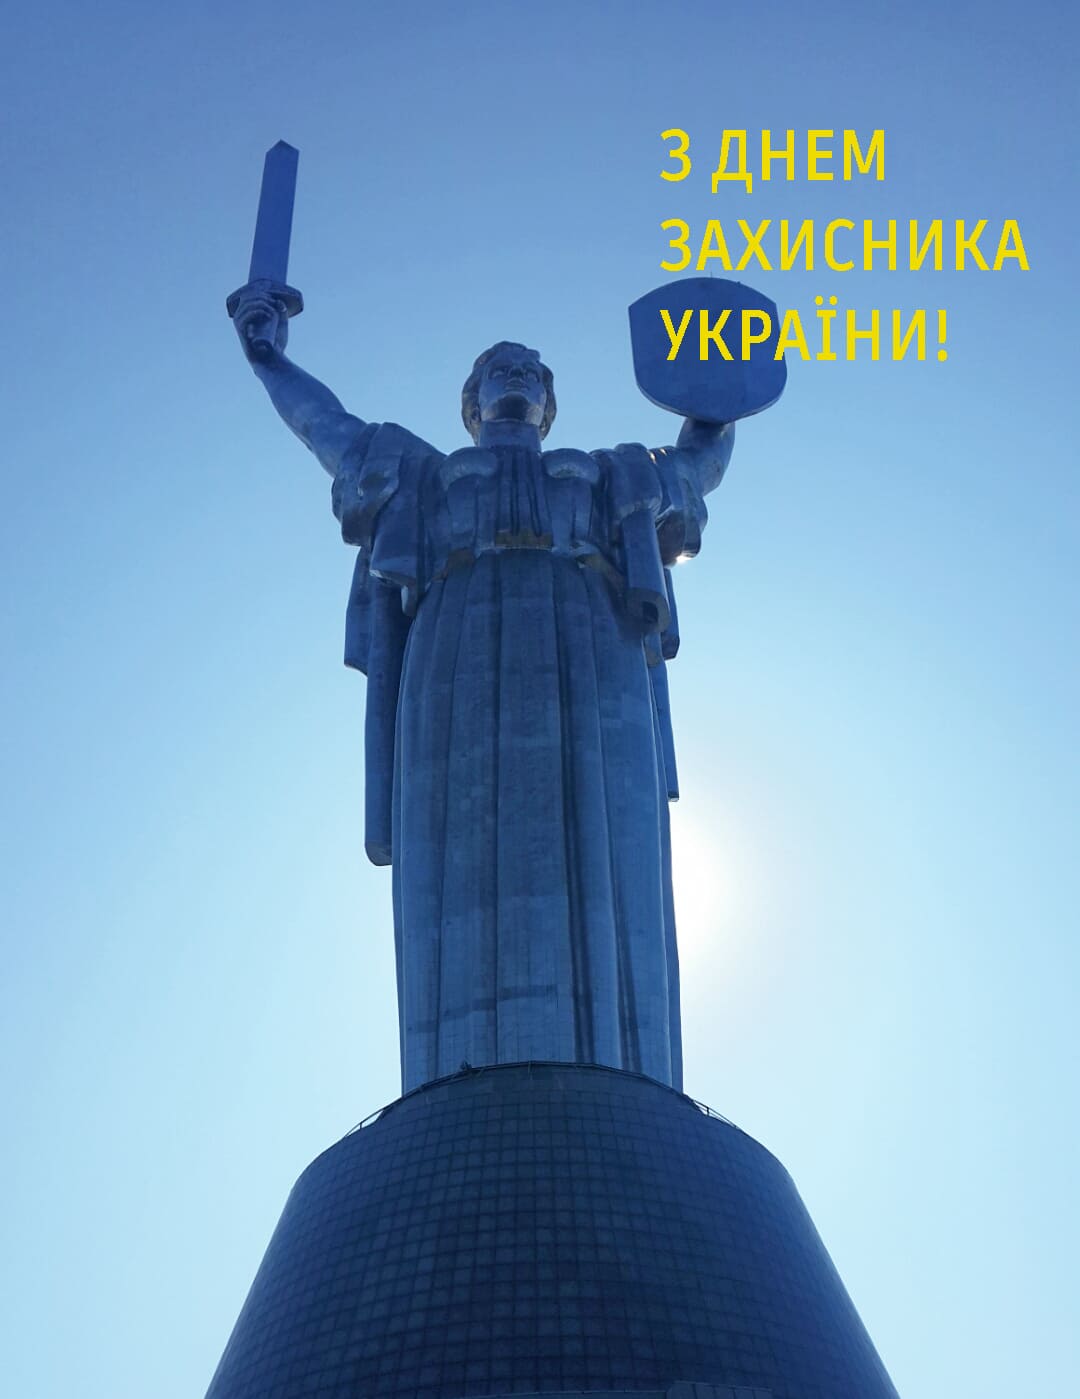 З Днем захисника України! 